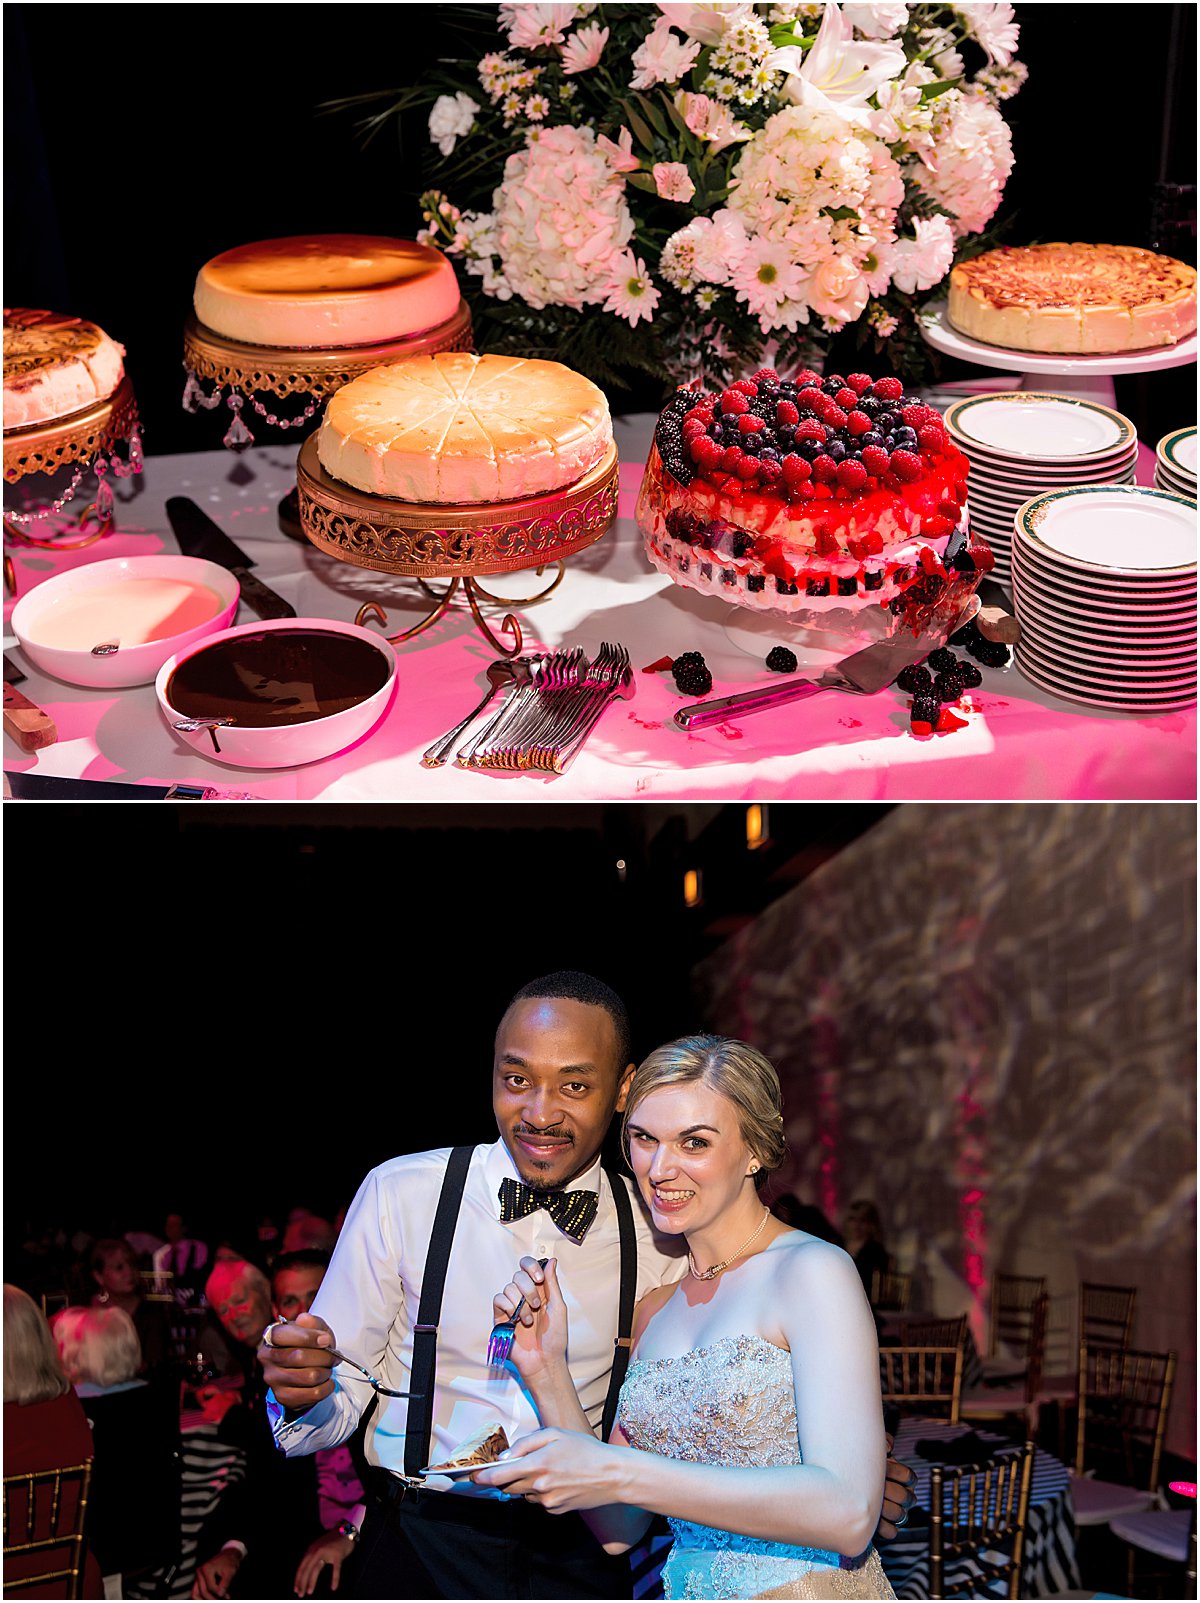 Wedding Cheesecake | Gourmet Adventures Cheesecake | Boca Raton, FL | Married in Palm Beach | www.marriedinpalmbeach.com | Enduring Impressions Photography